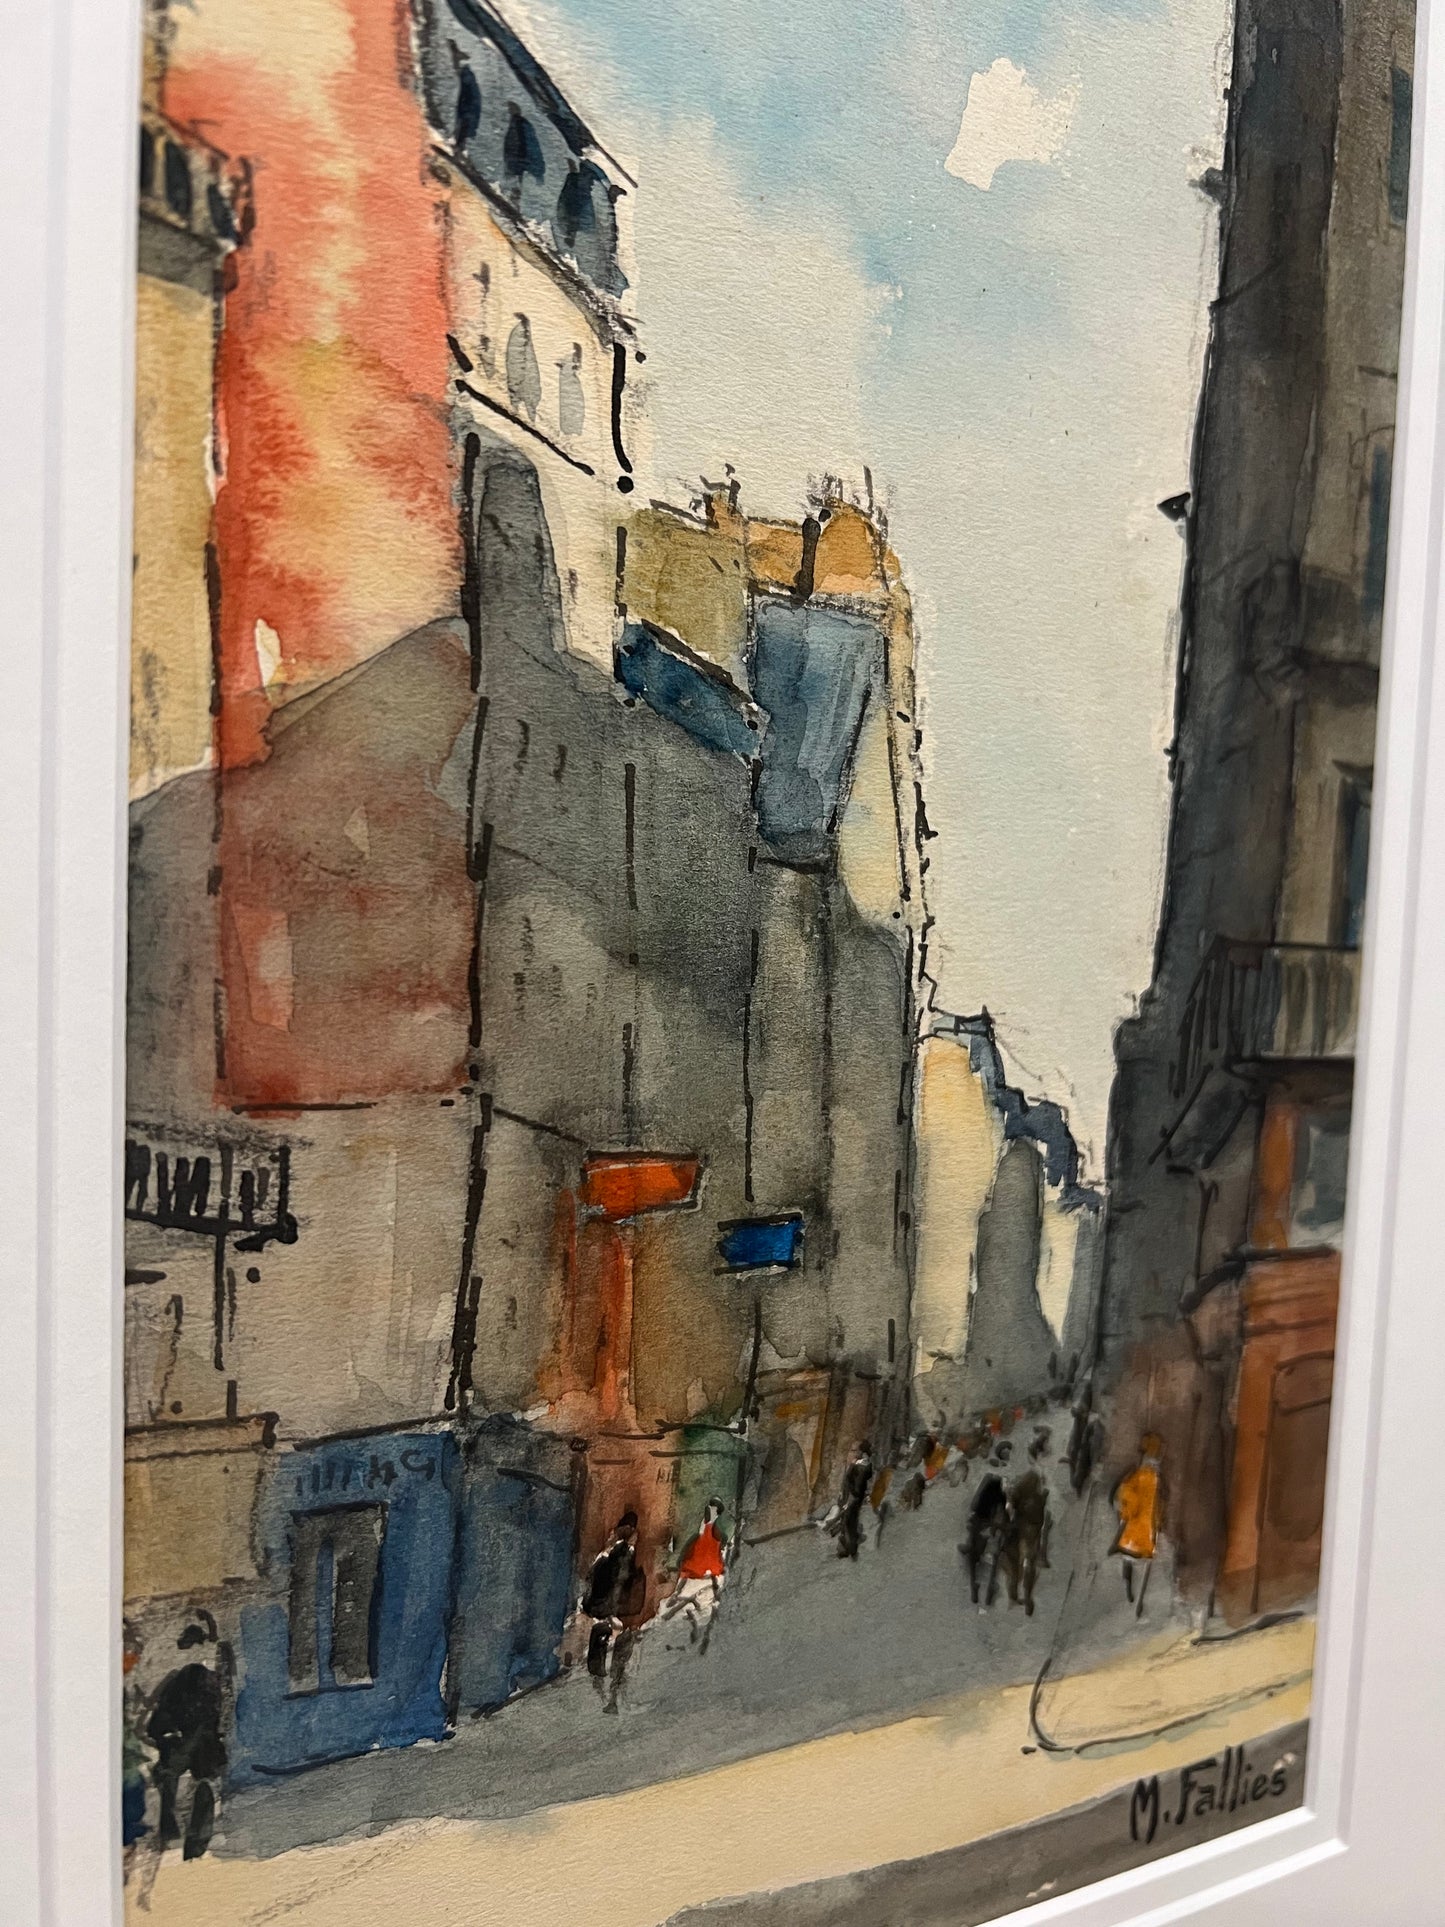 Parisian Street (6.25"x 11.75")